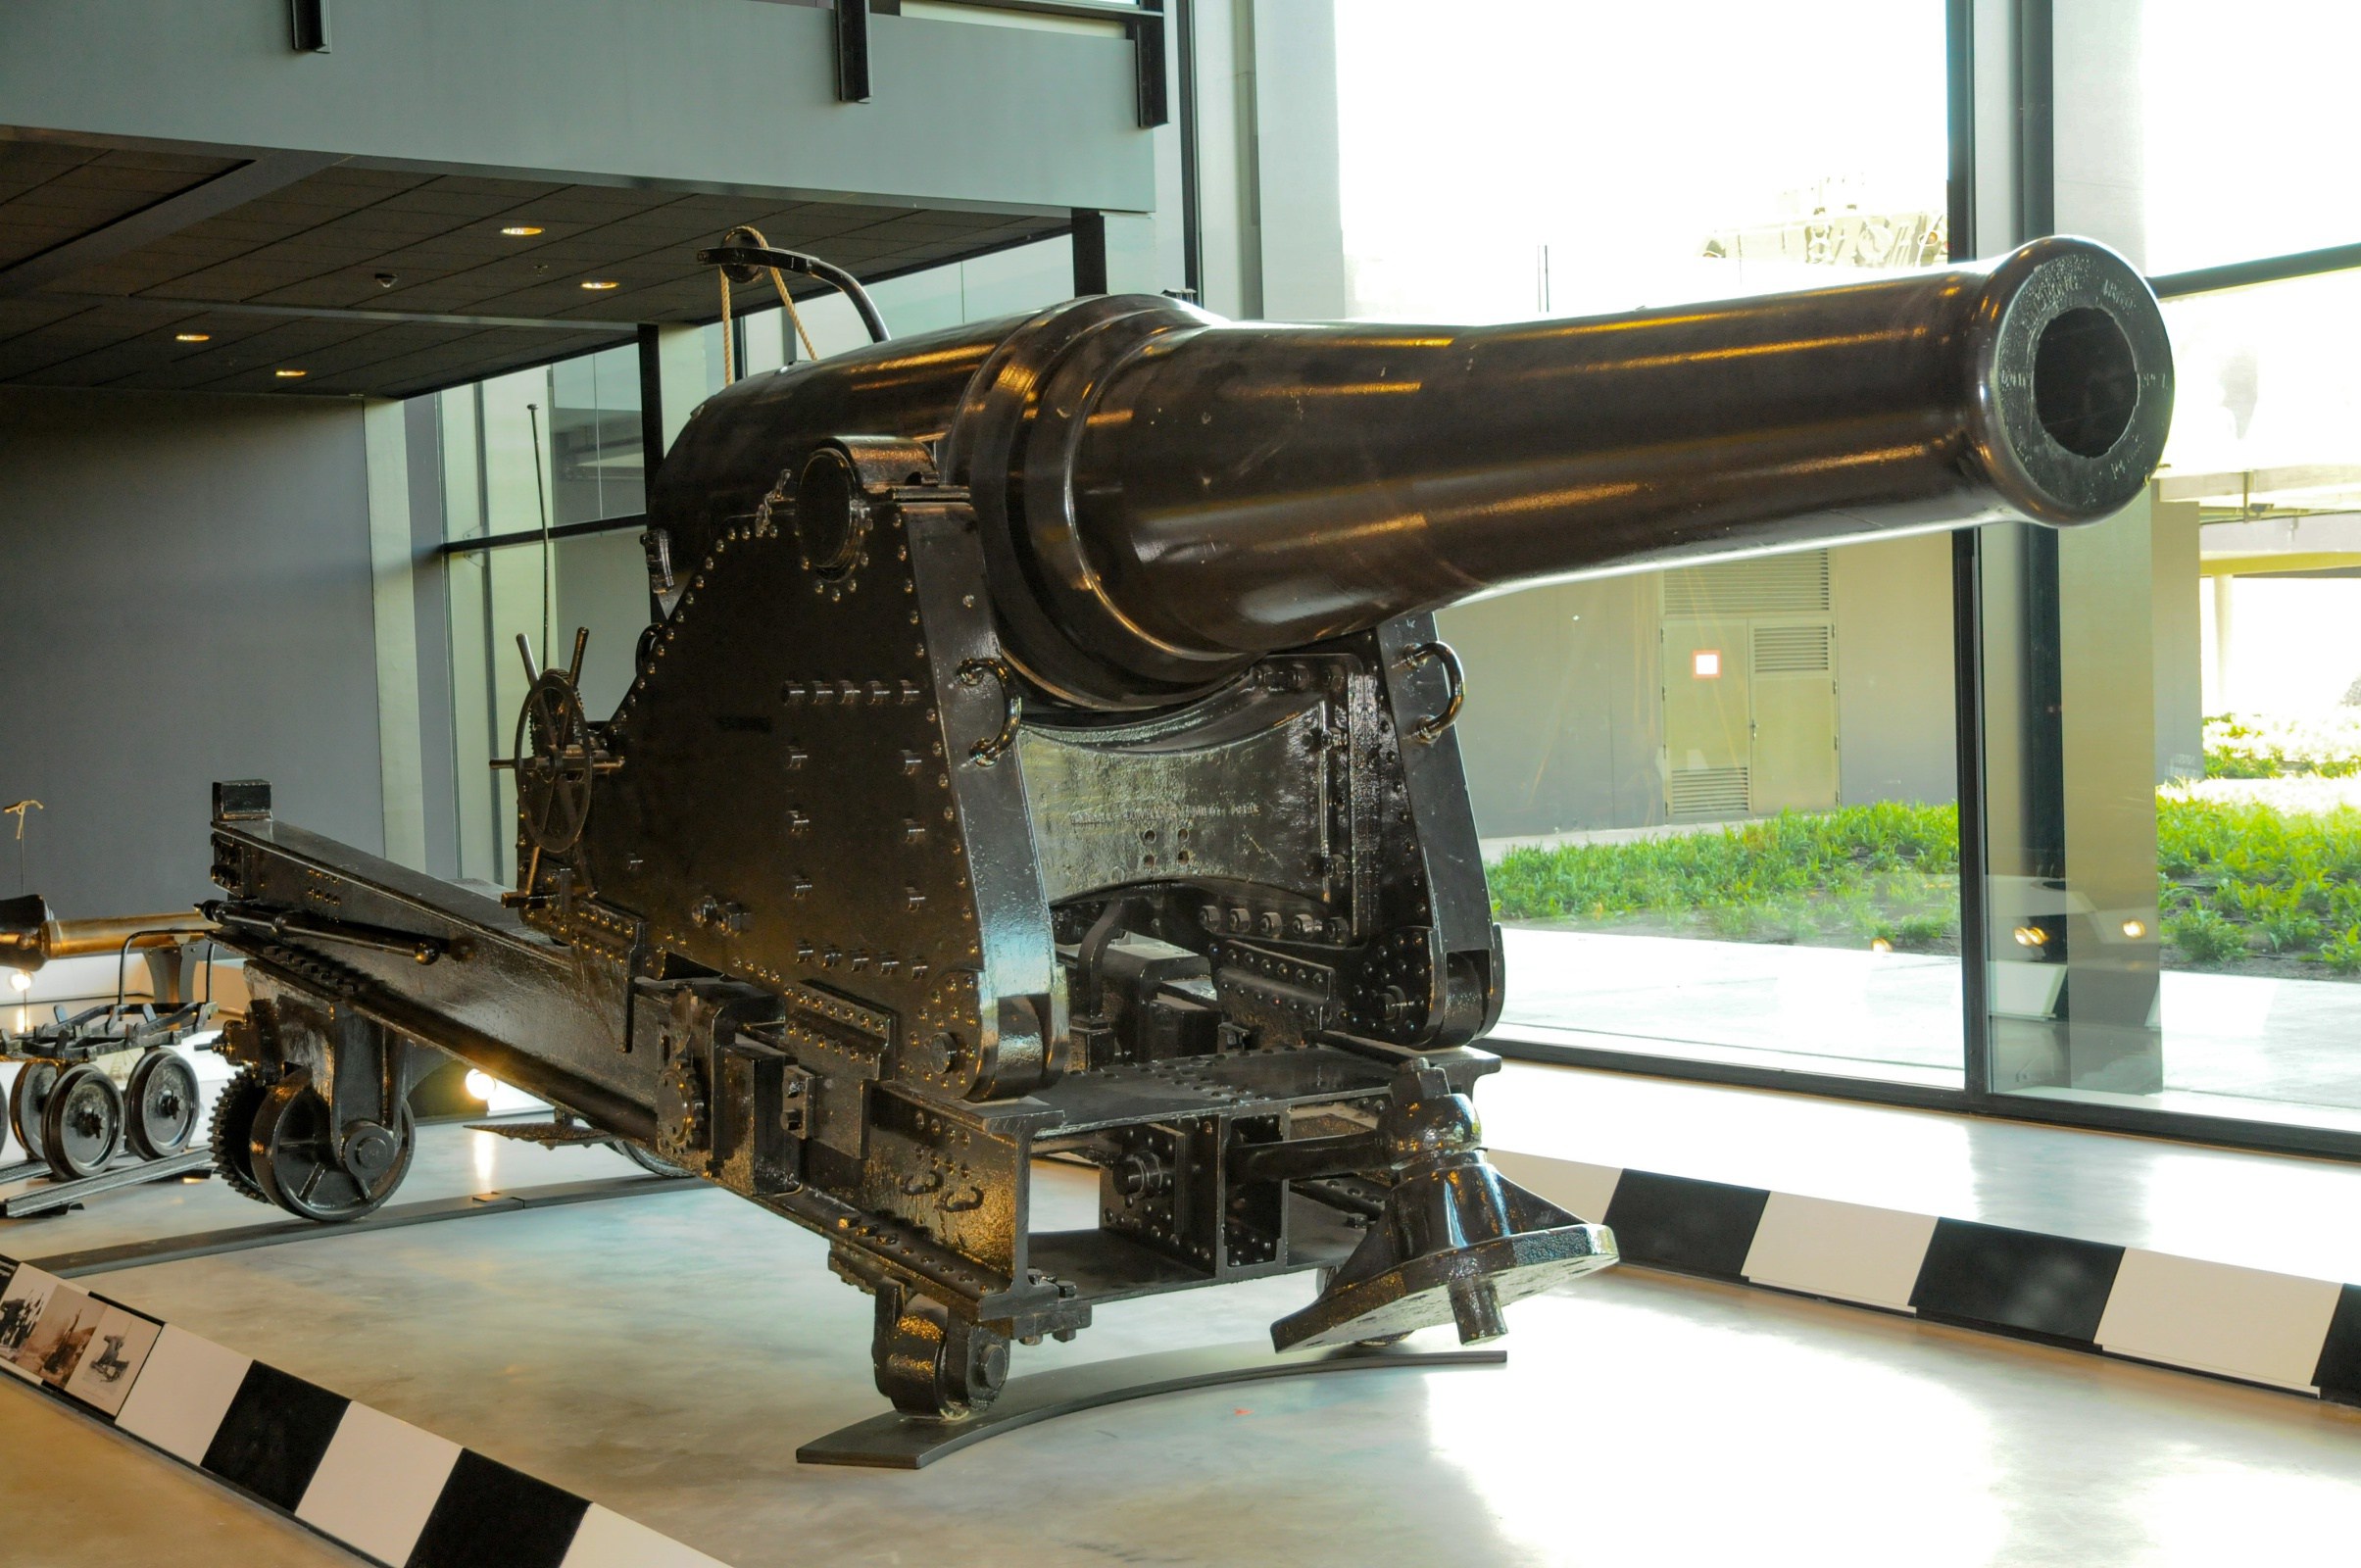 24 cm Iron Cannon